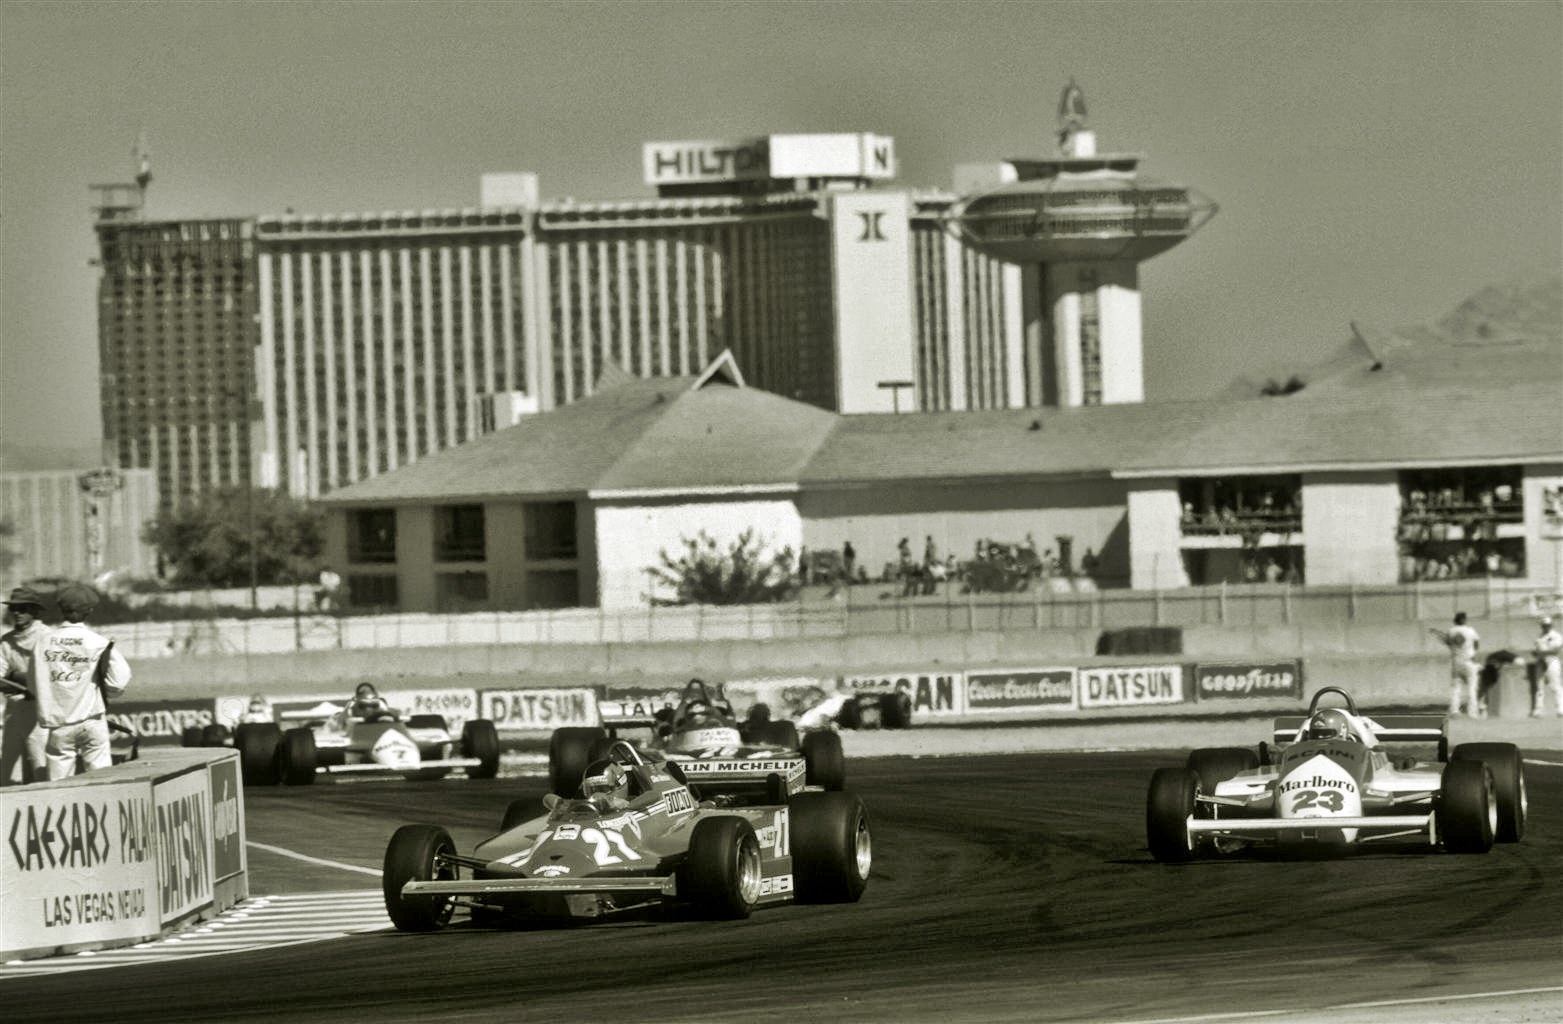 The 1981 Caesars Palace Grand Prix in Las Vegas.